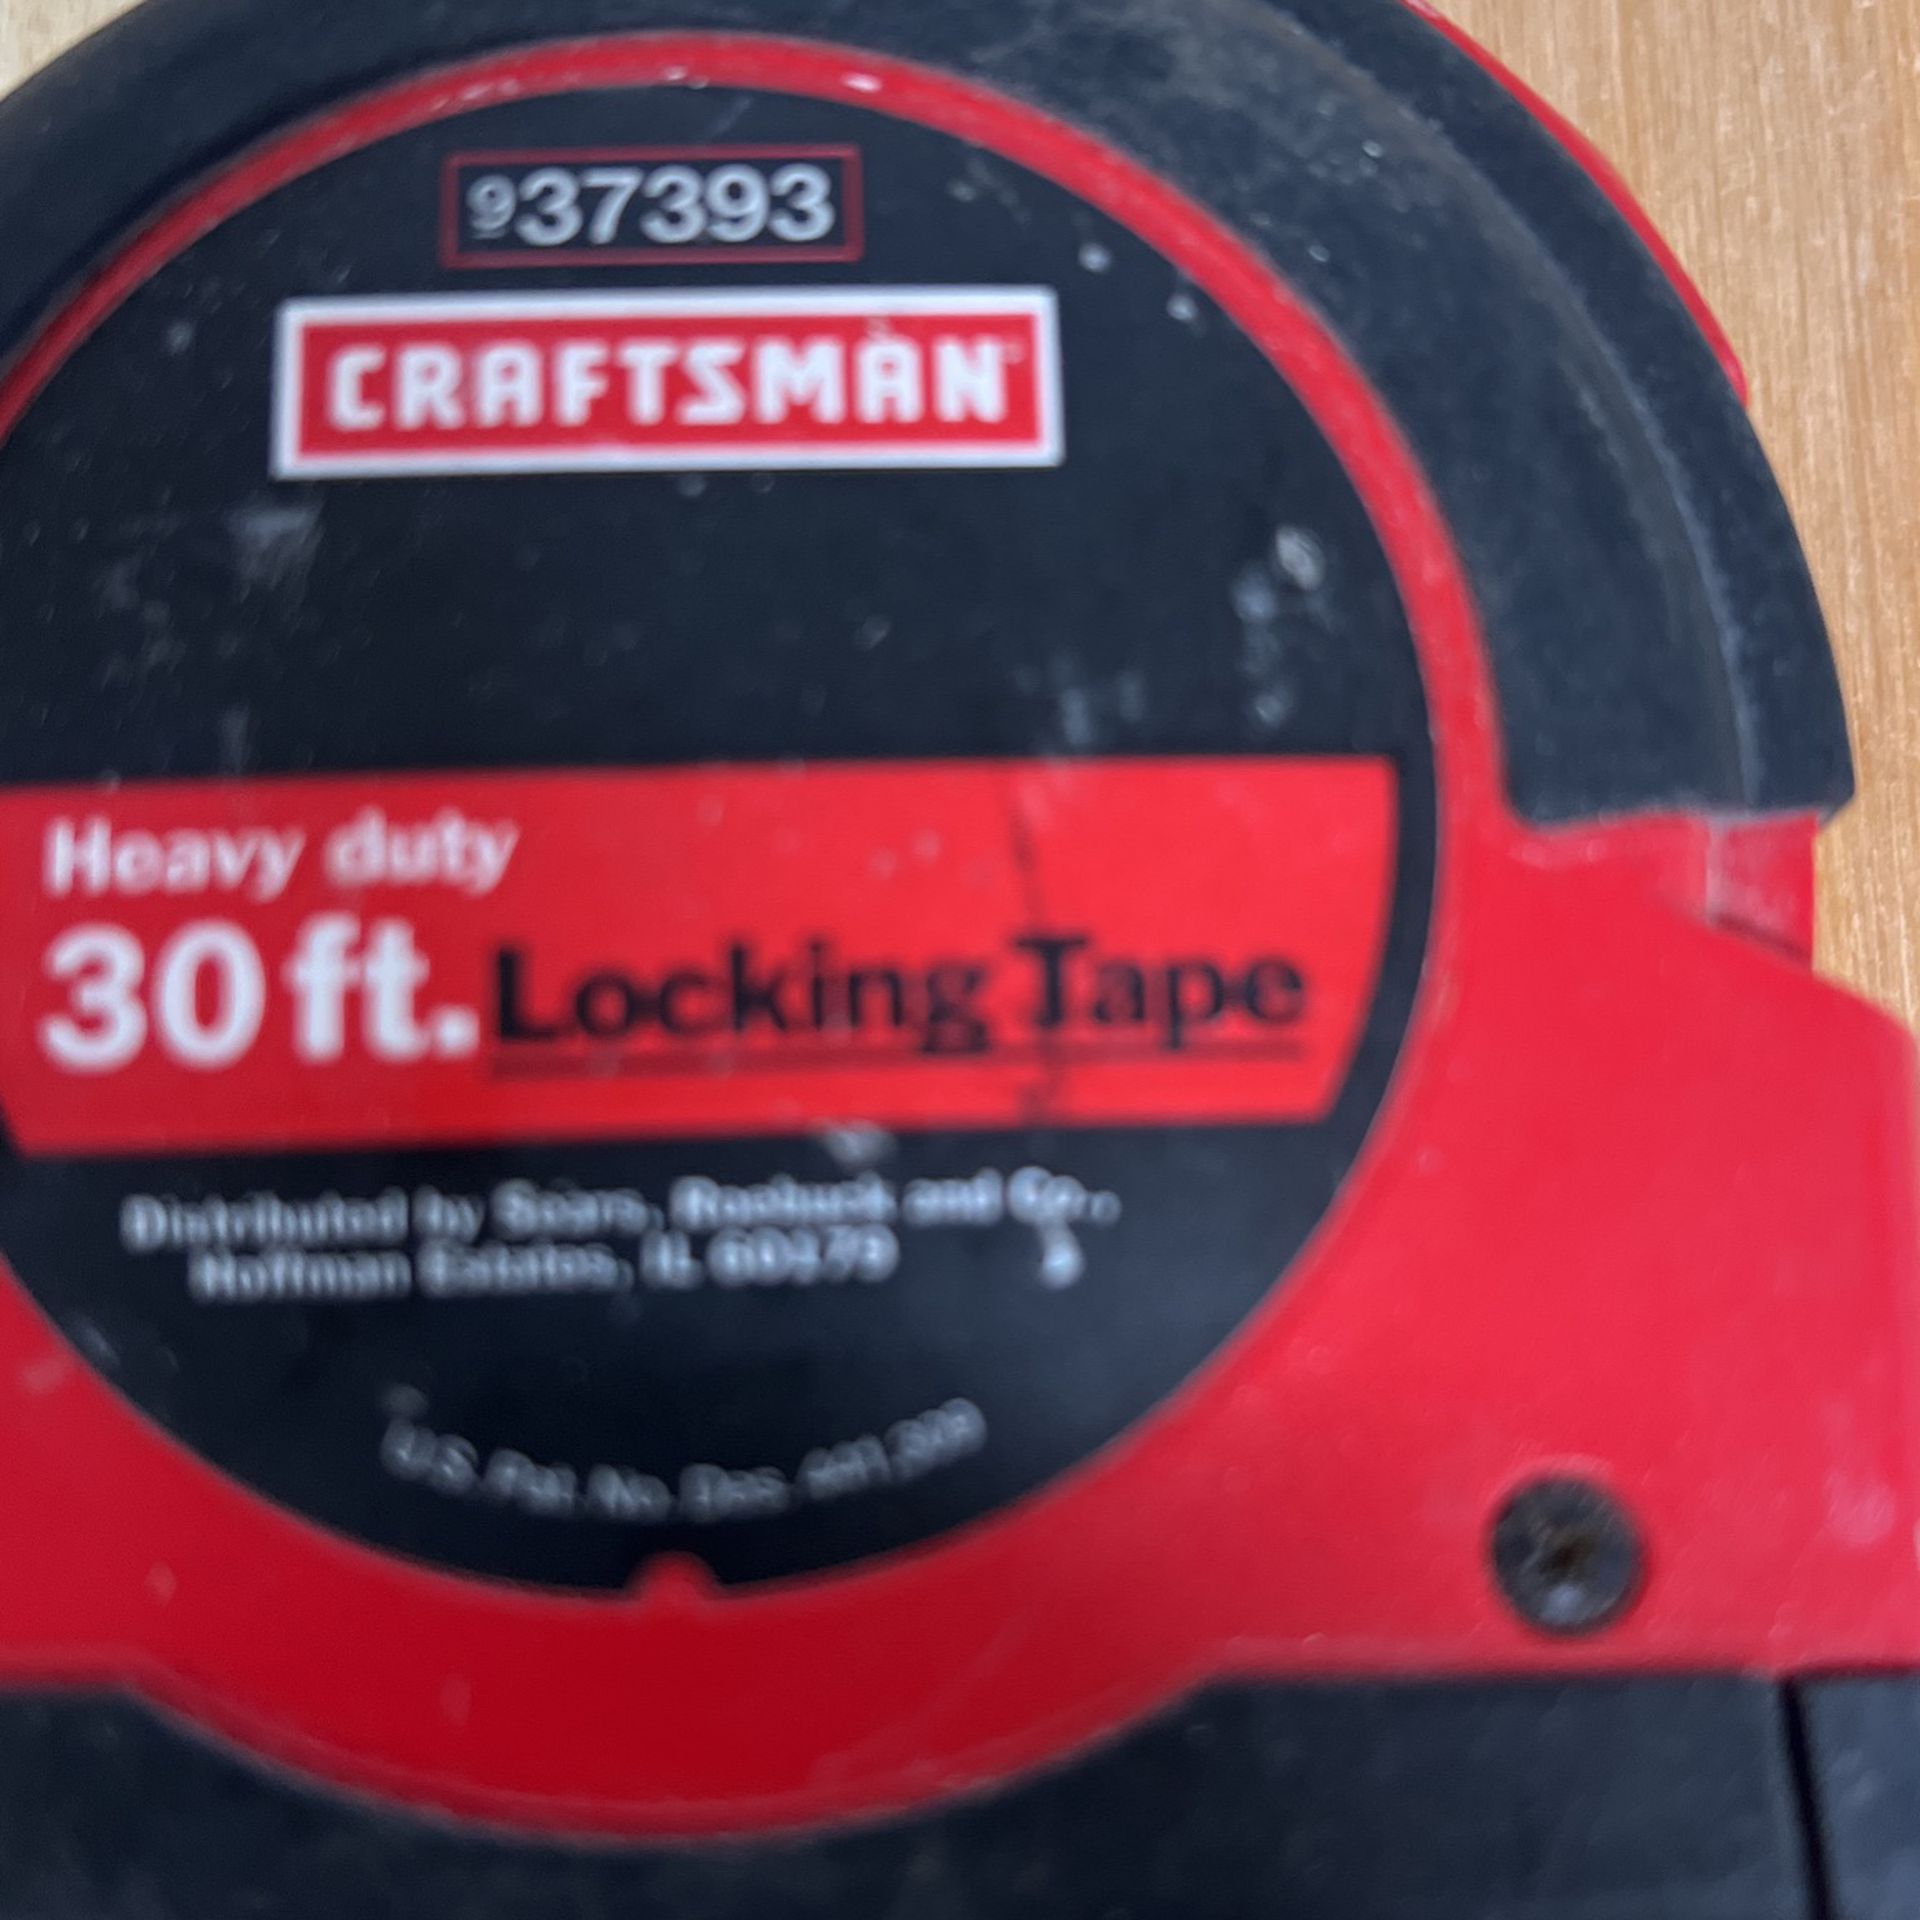 2 Craftsman Tape Measures for Sale in Kokomo, IN - OfferUp